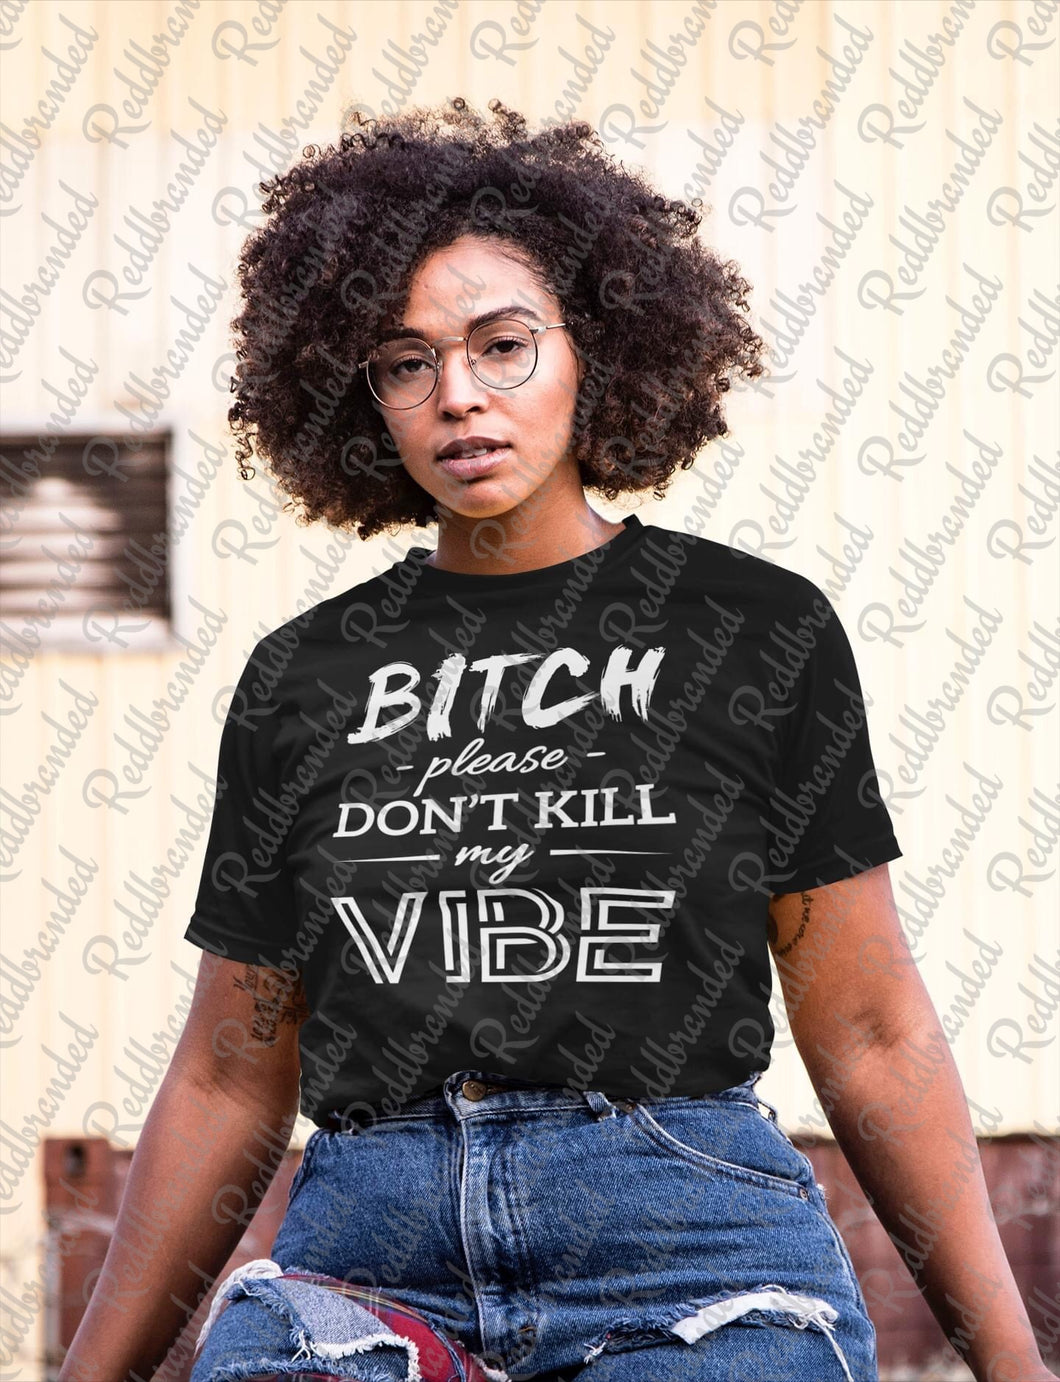 Bitch don’t kill my vibe